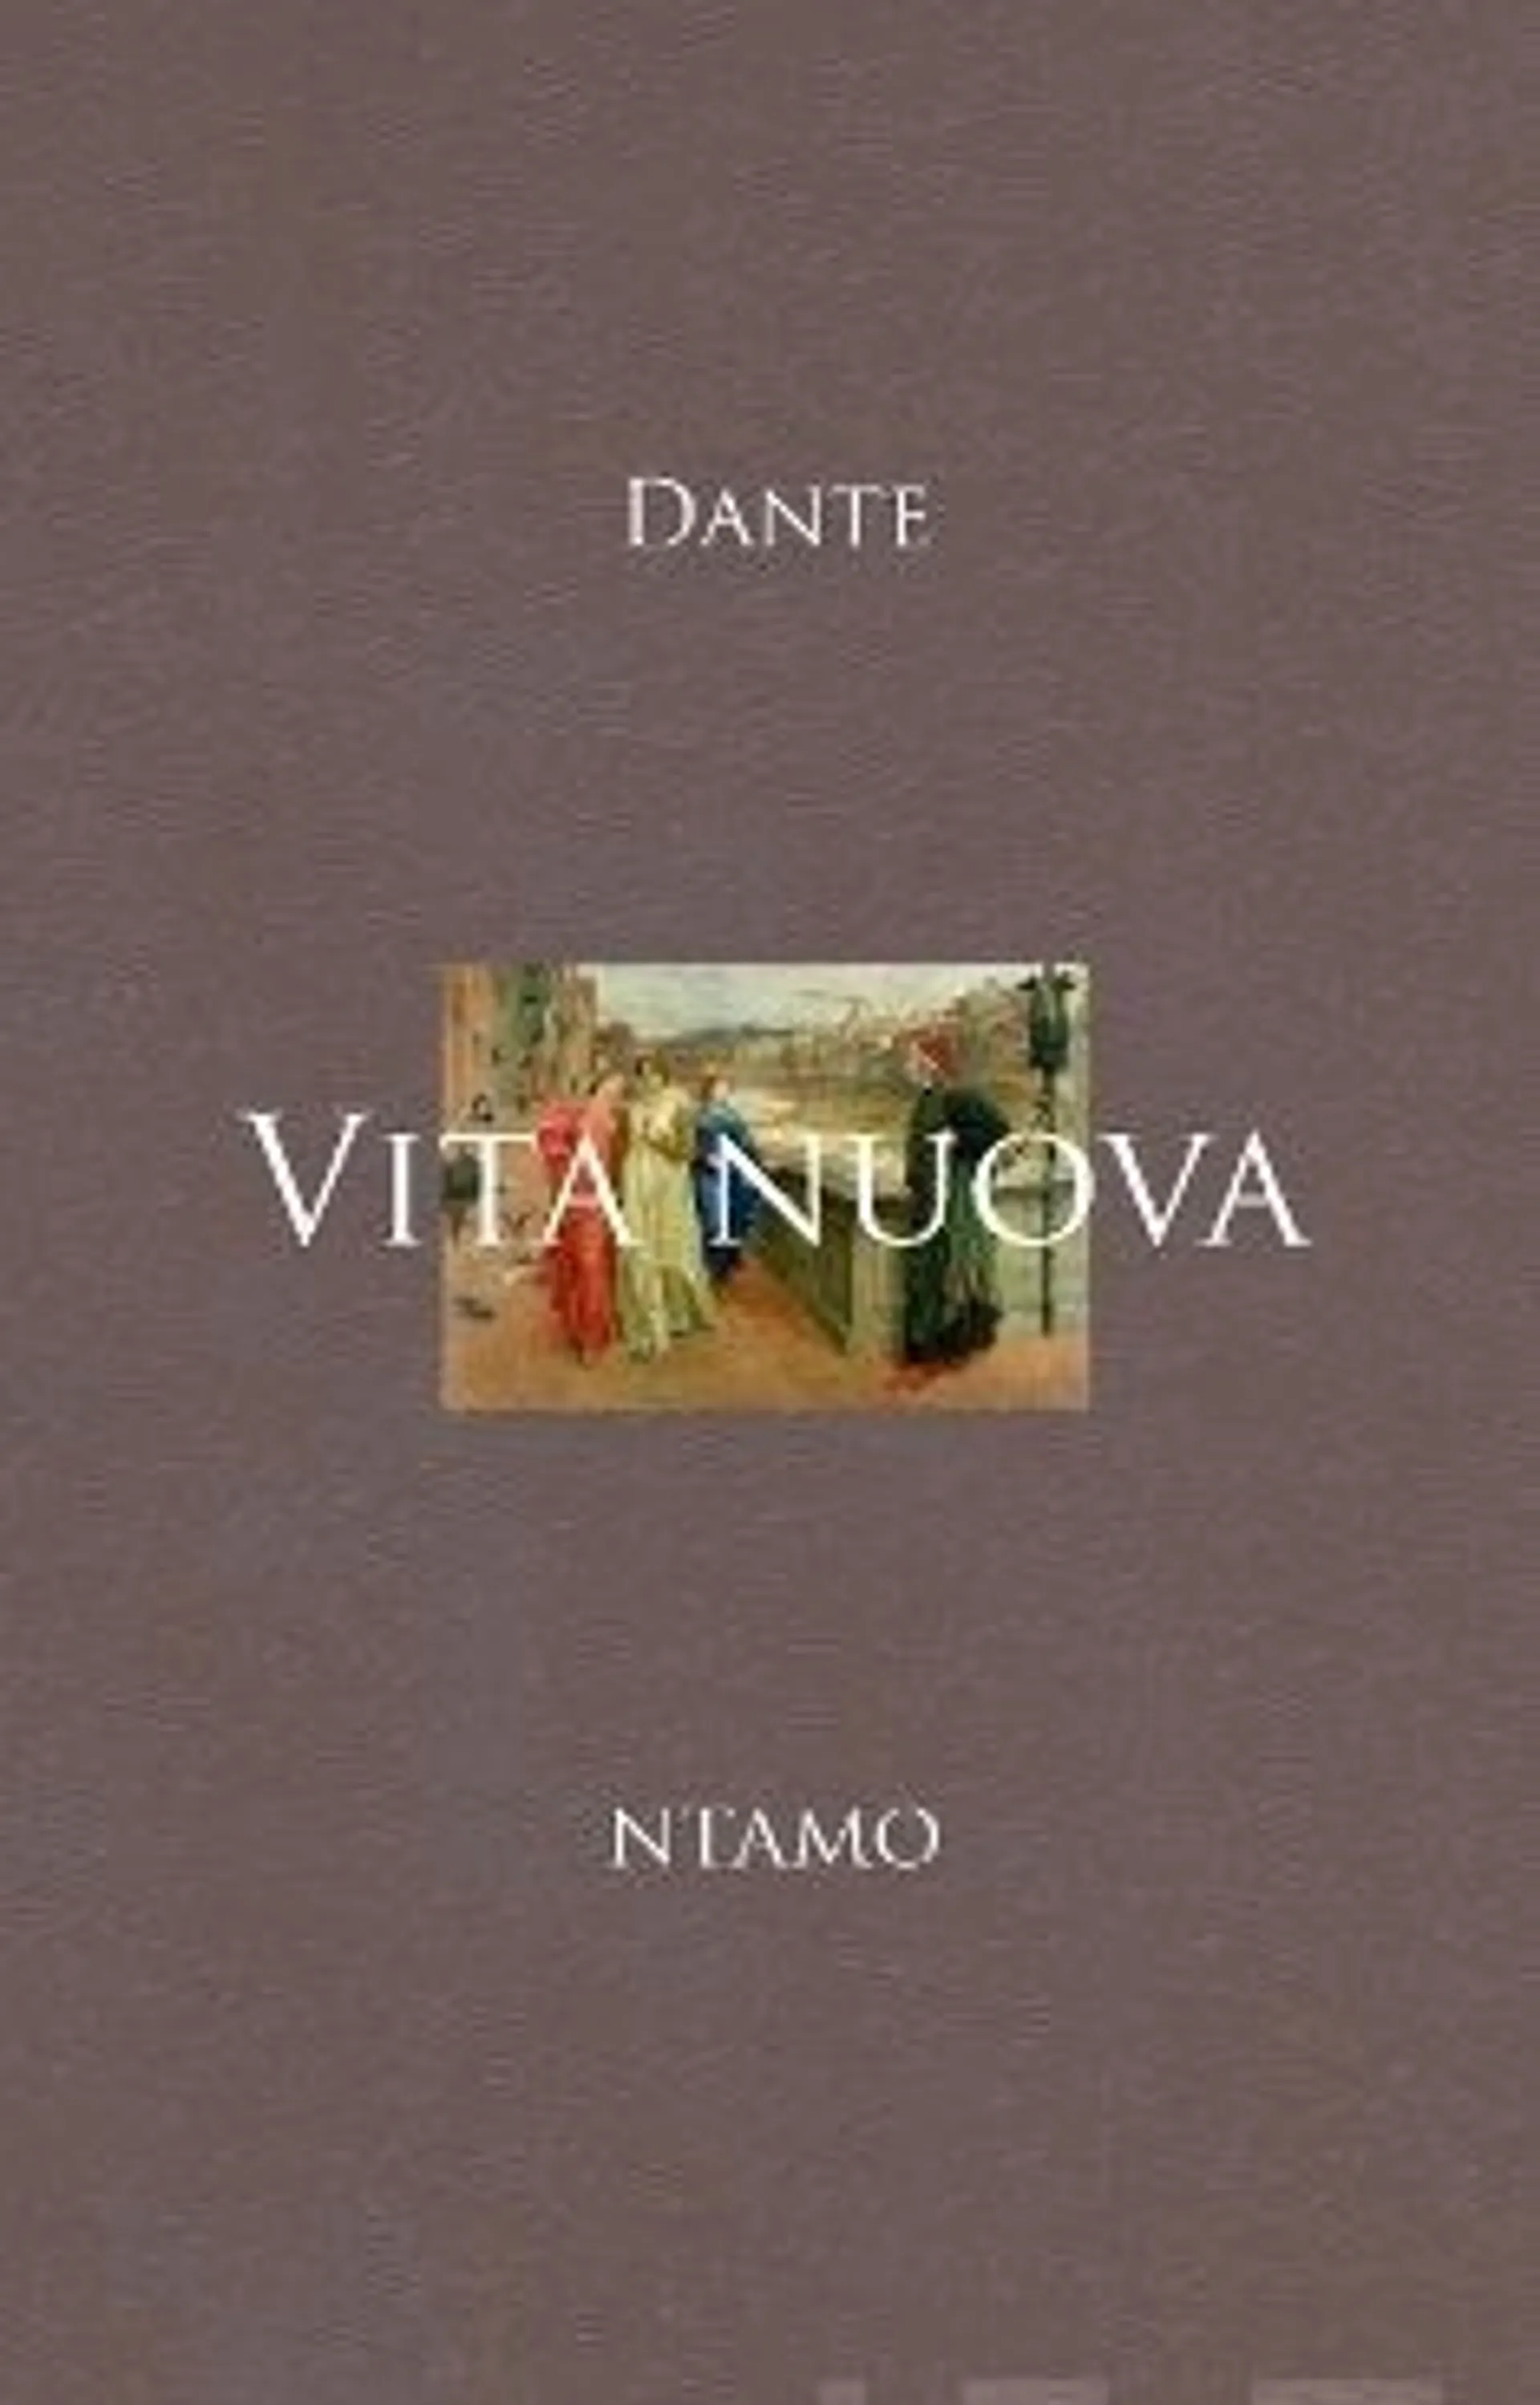 Dante, Vita nuova